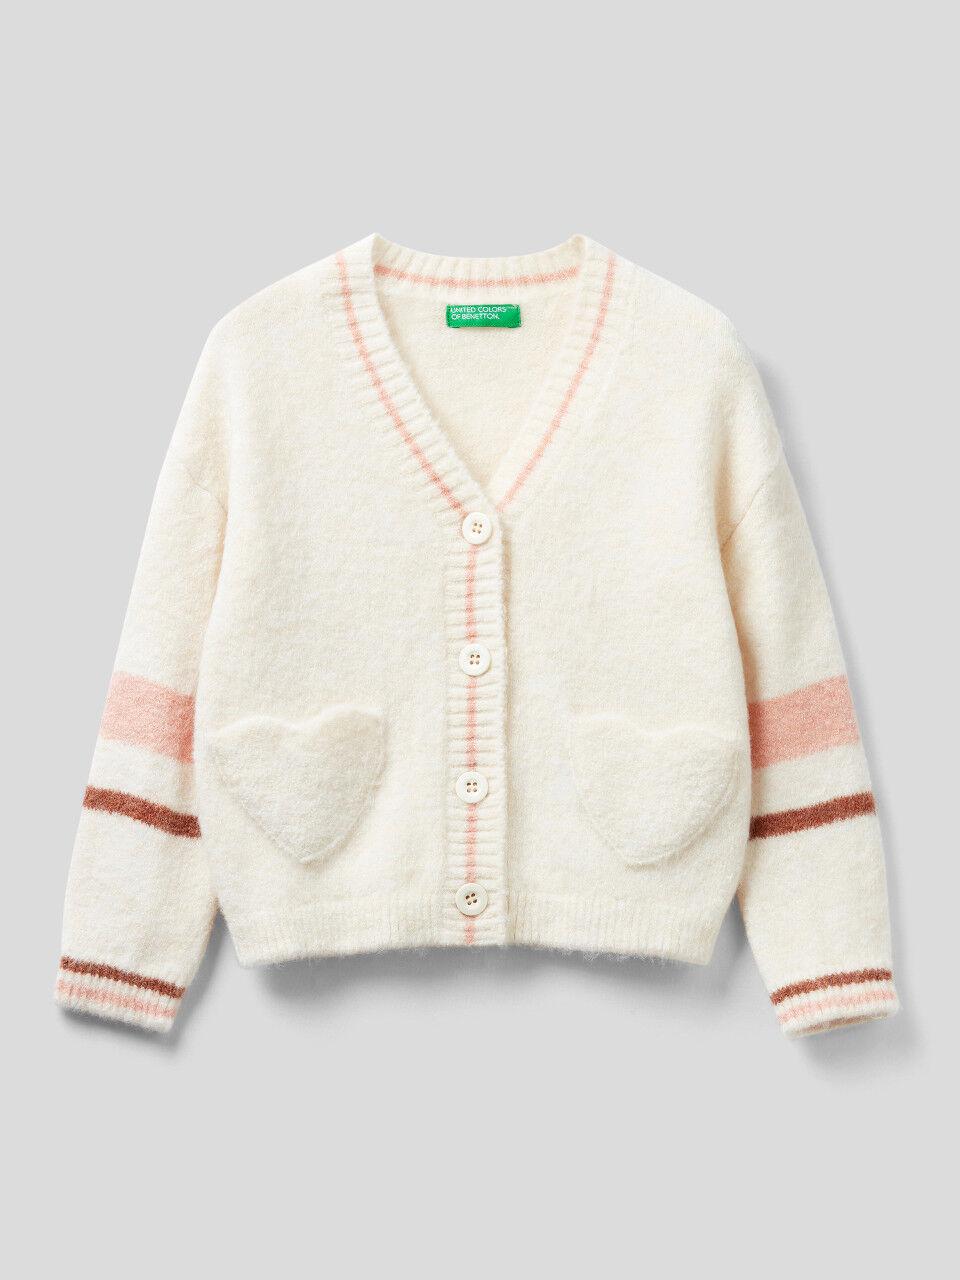 United Colors of Benetton Girls Cardigan Sweater 